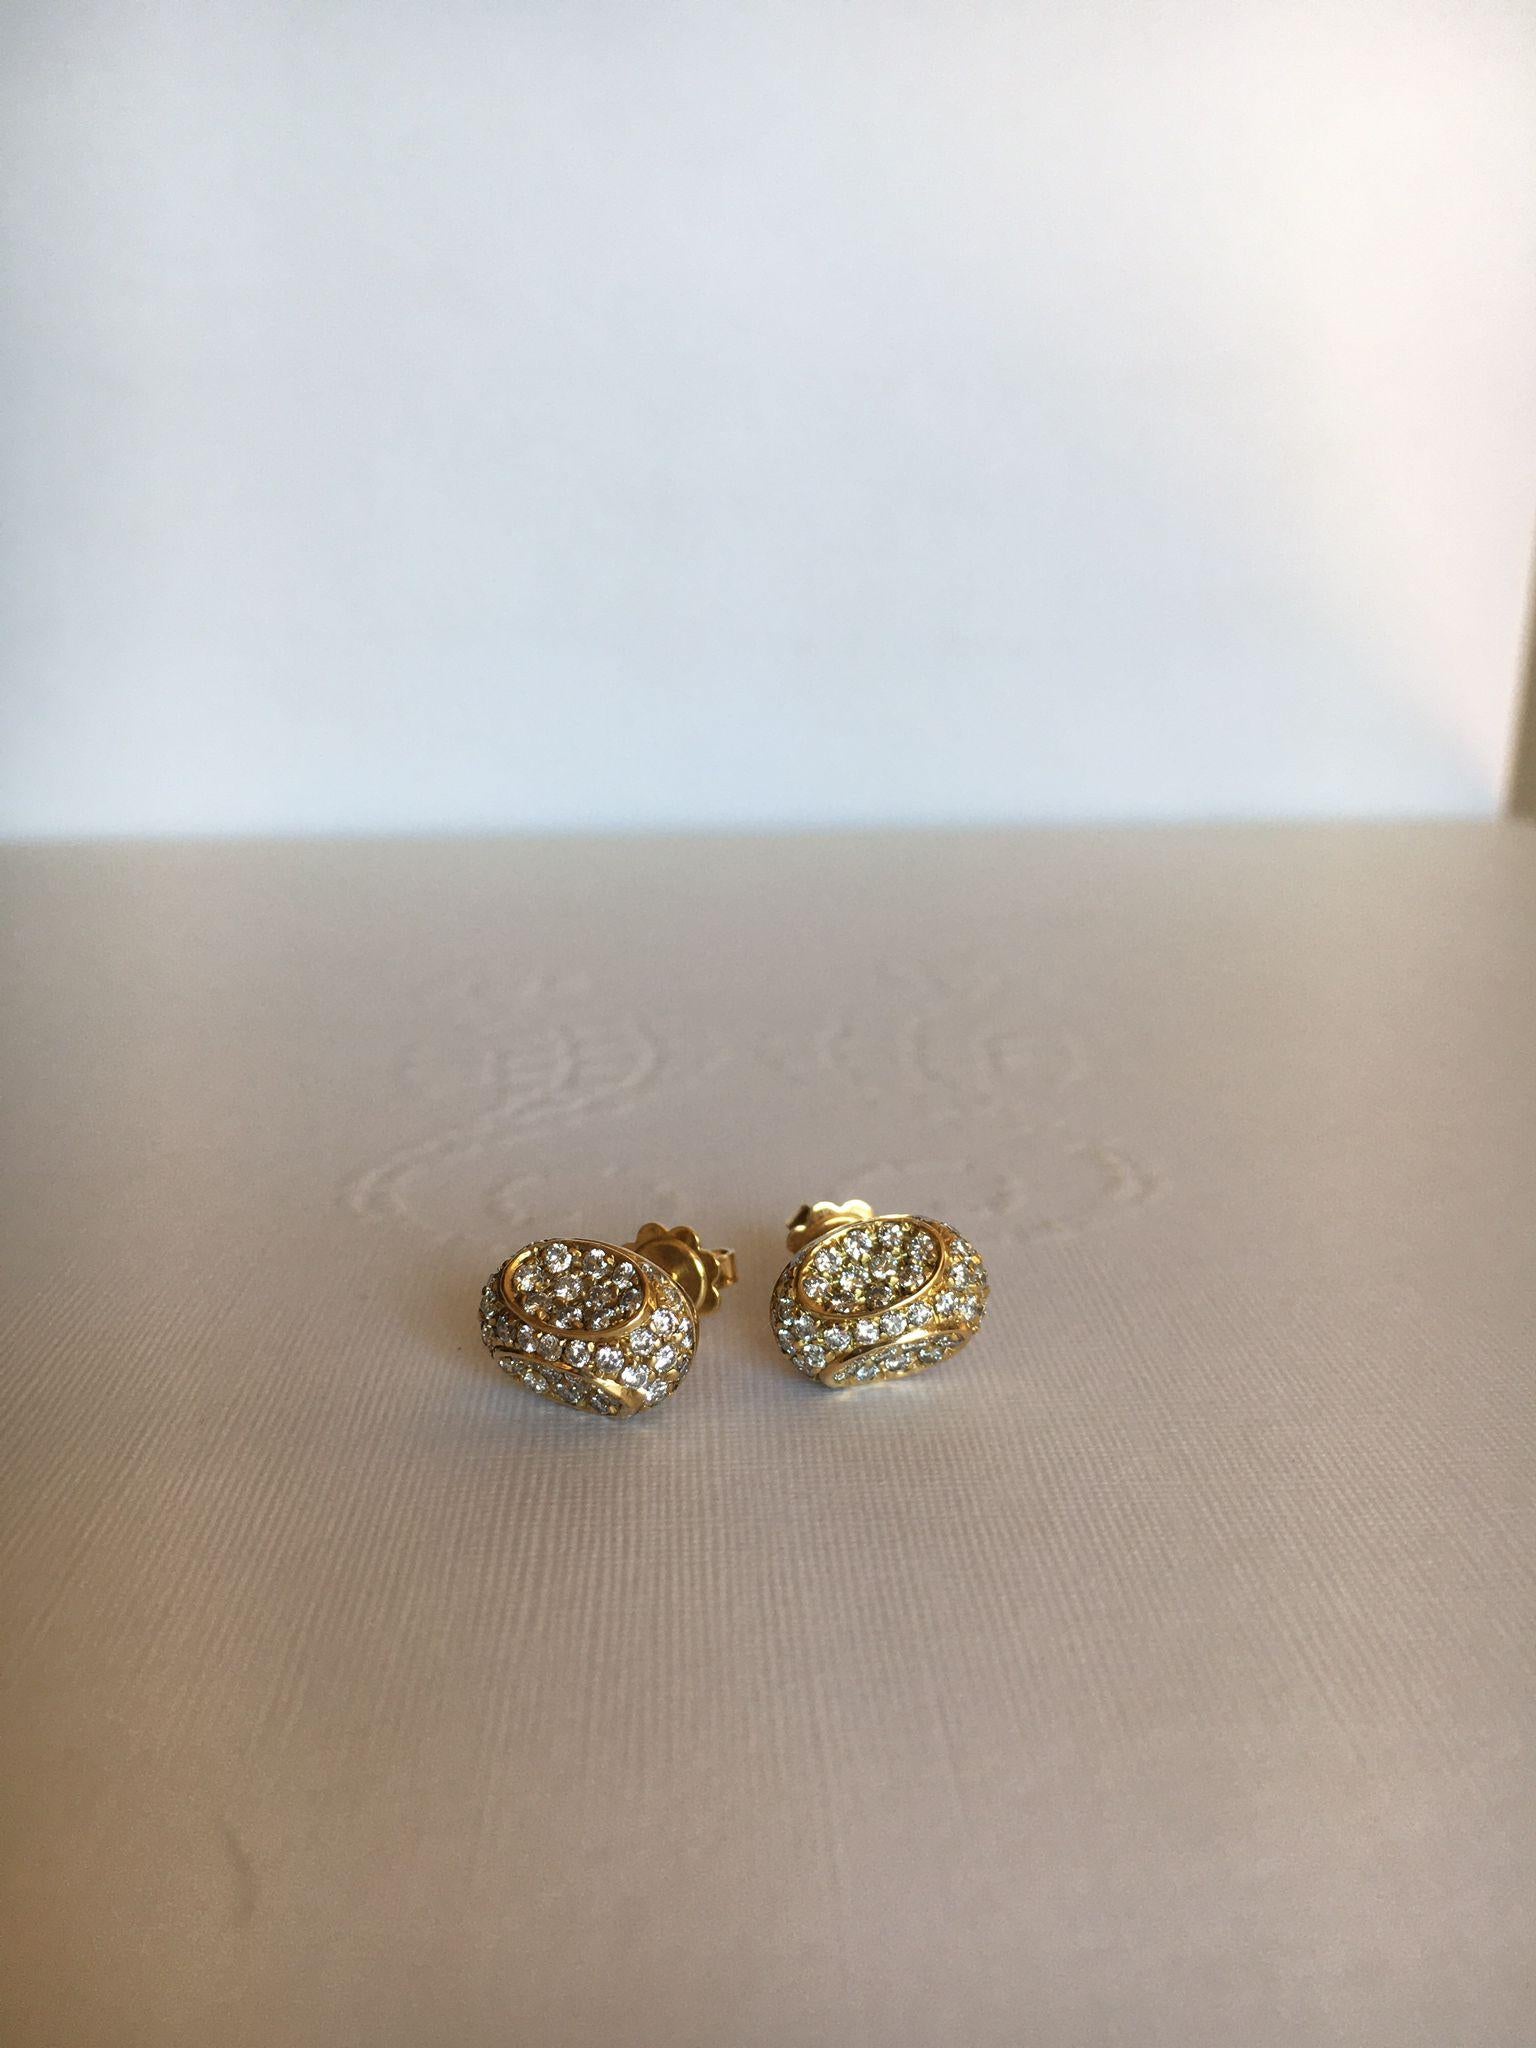 Brilliant Cut 18kt yellow gold 4.98ct earrings, diamonds 1.72ct, handmade stud earrings For Sale